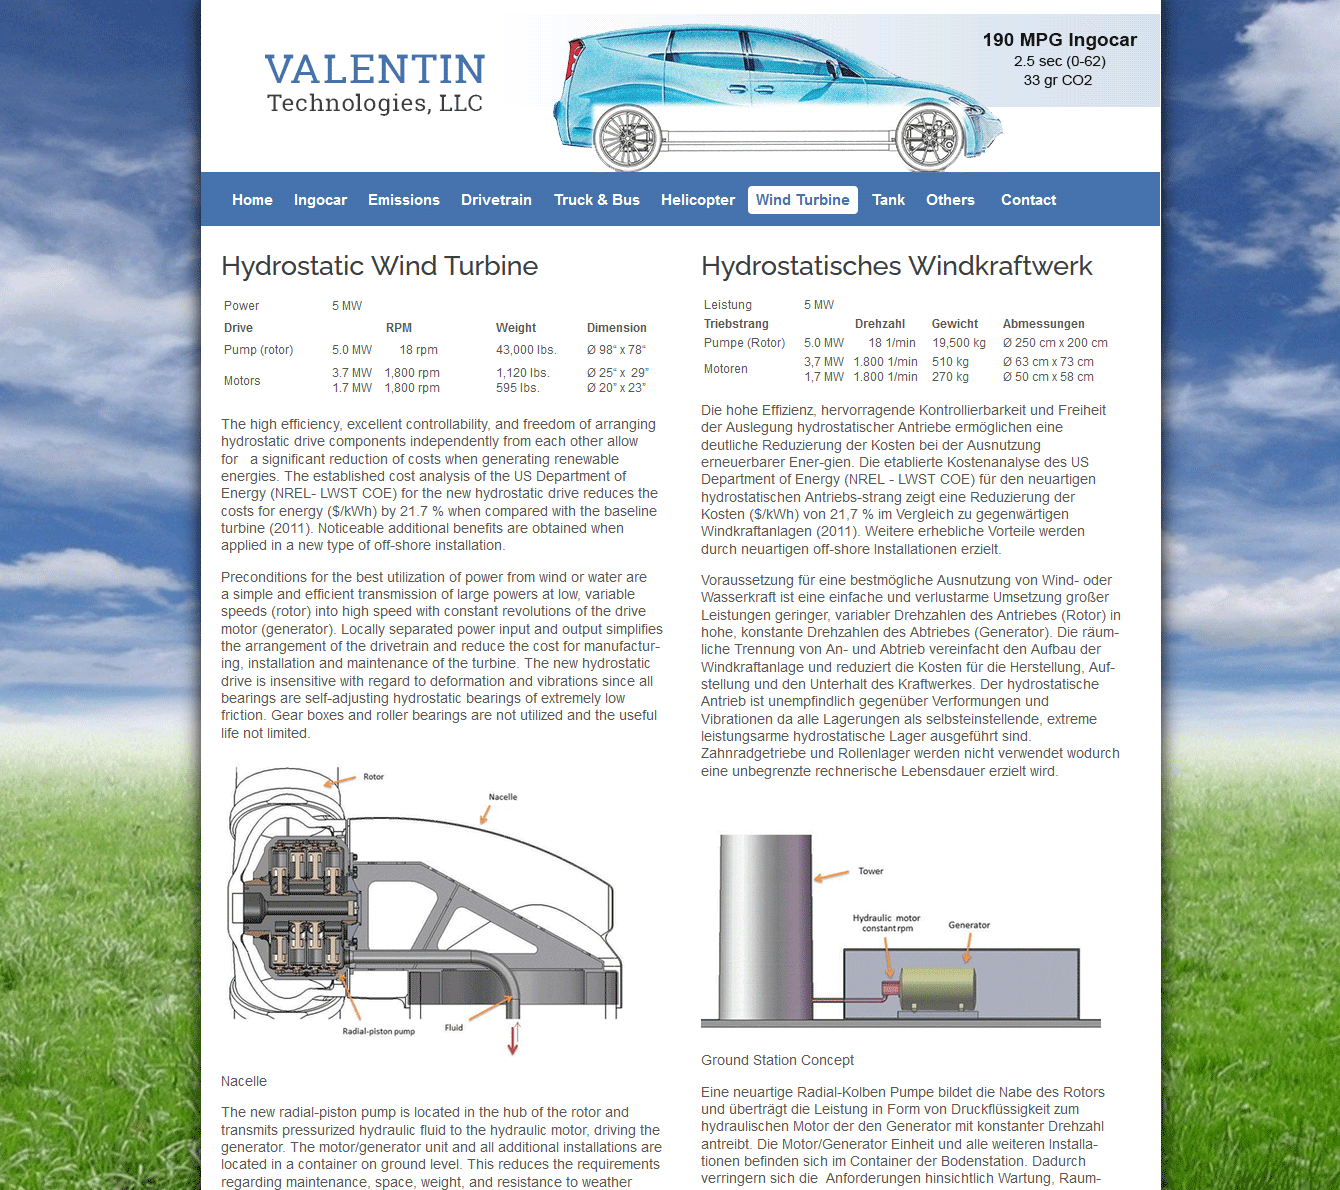 Valentin Technologies